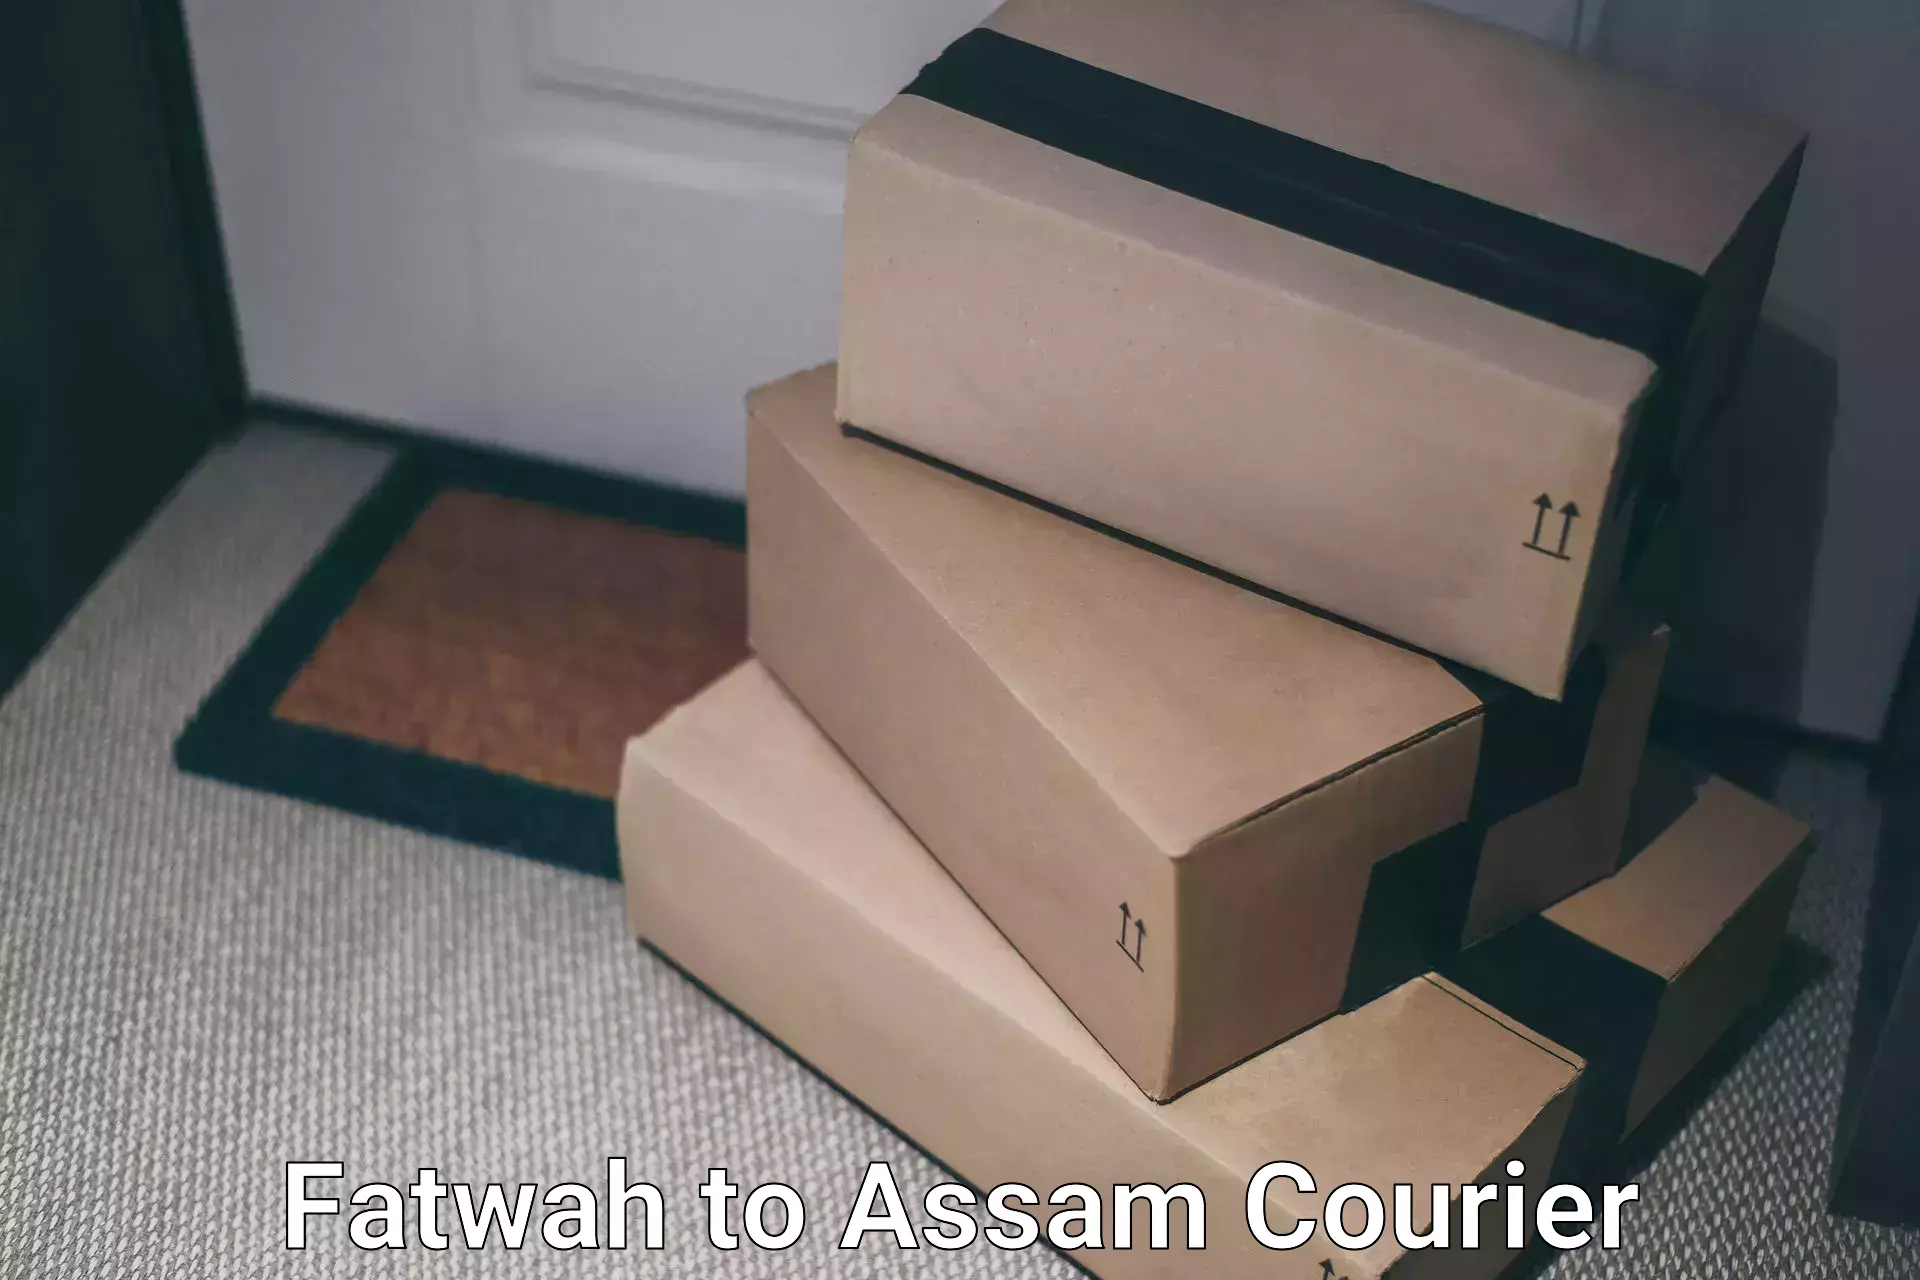 Logistics service provider Fatwah to Assam